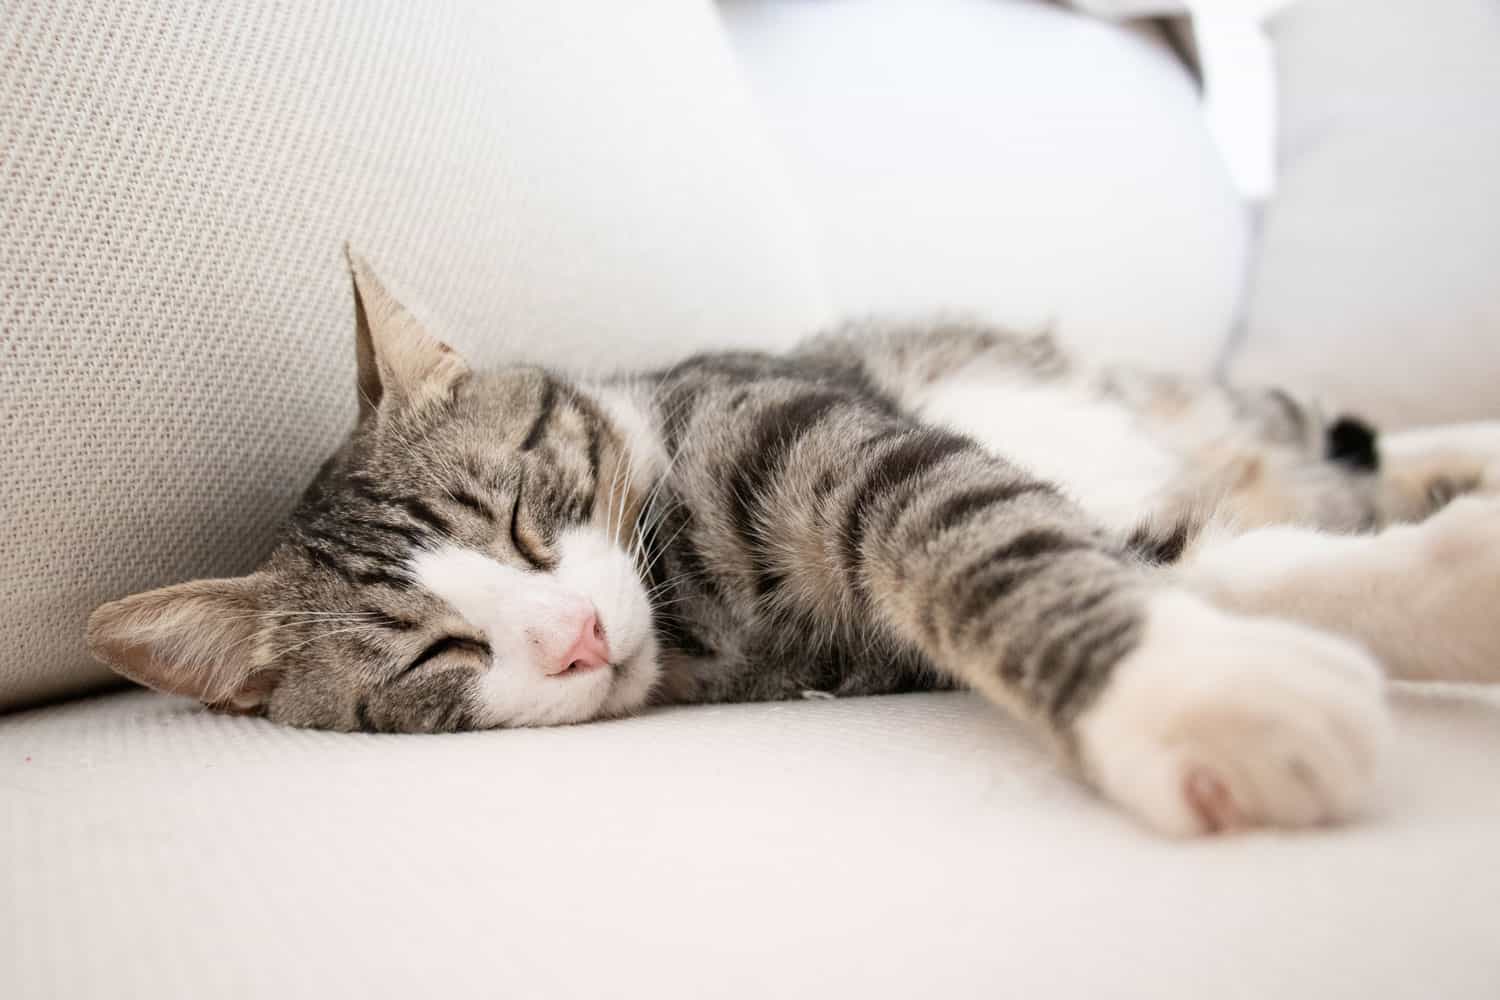 Tabby cat sleeping on the sofa - cats sleep so much